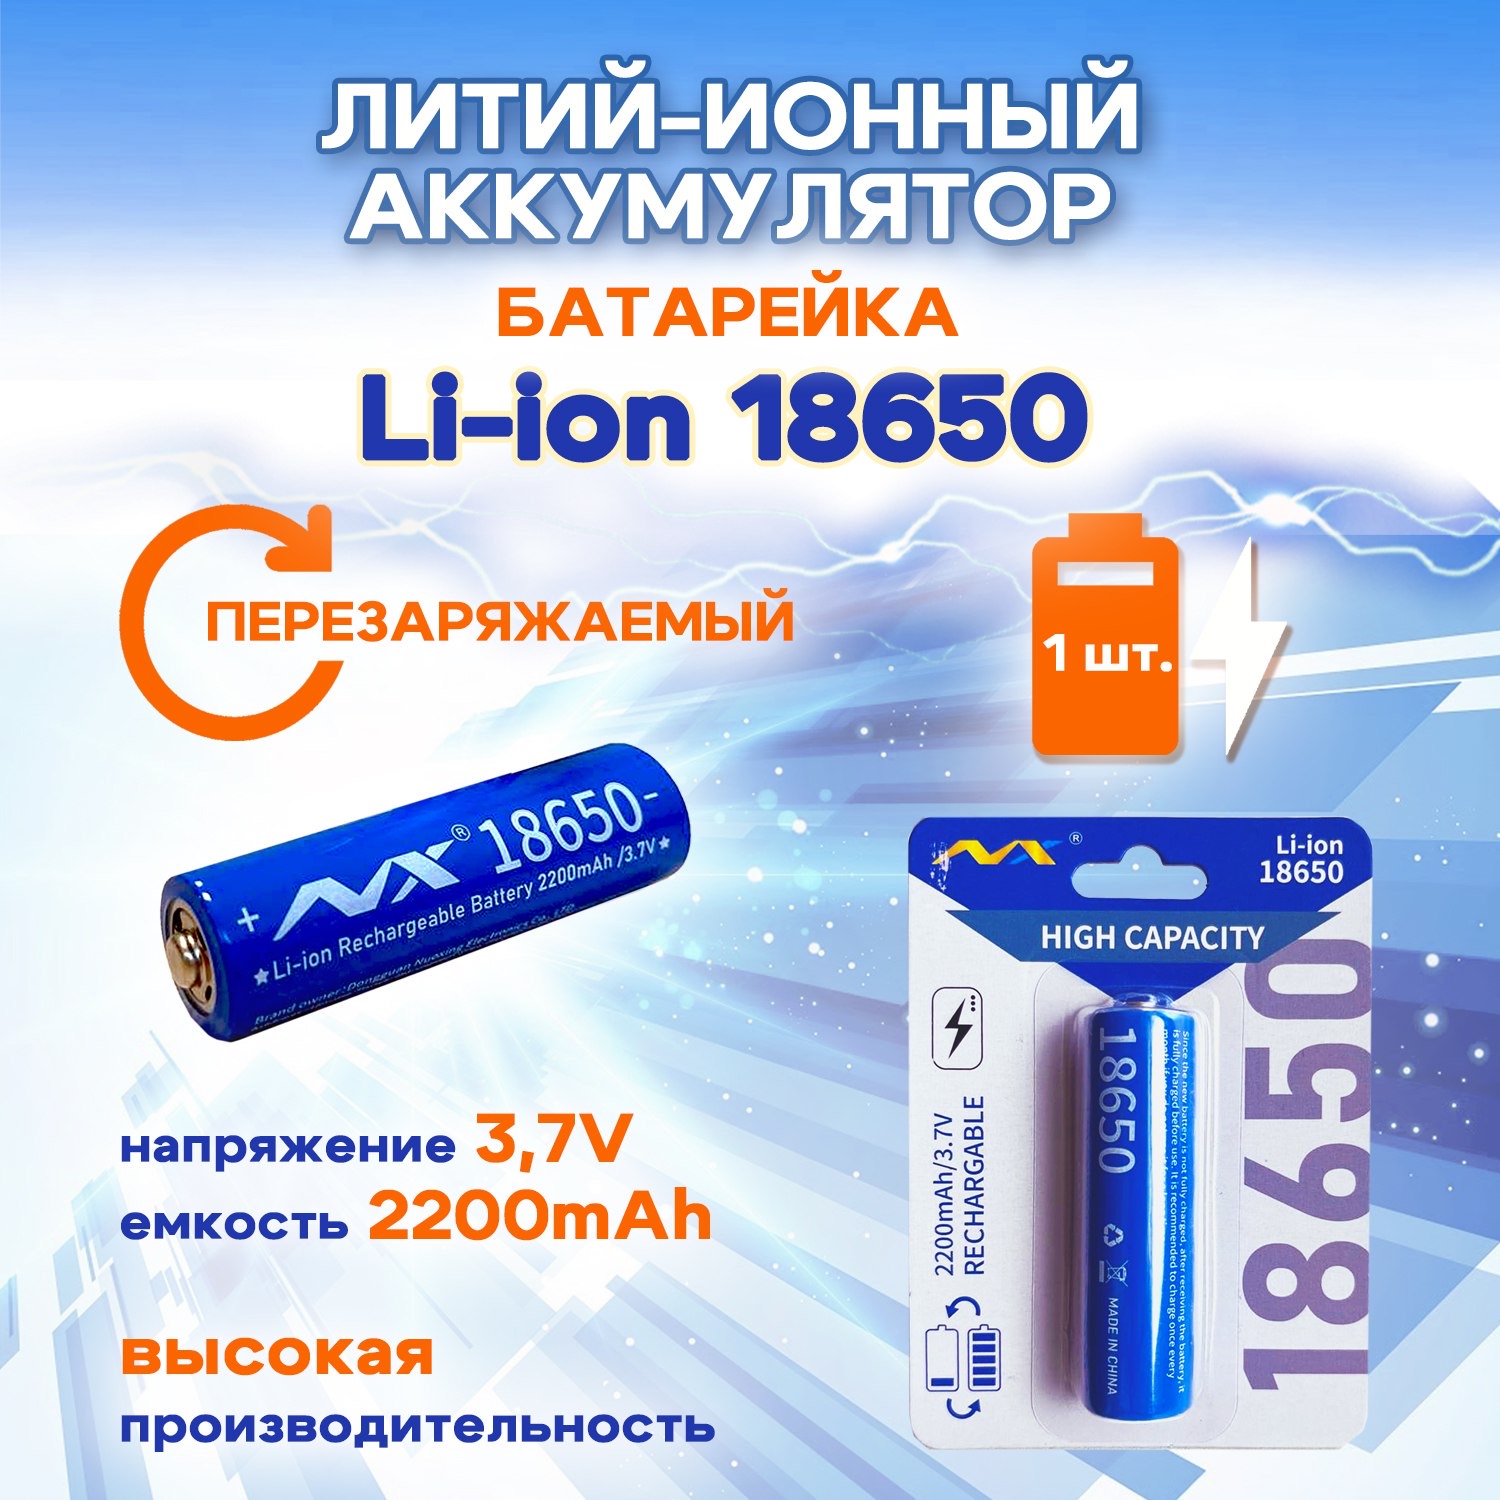 Батарейка-аккумулятор SUPER ENERGY 18650 3,7 В литий-ионный перезаряжаемый 2200 mAh, 1 шт аккумулятор для шуруповертов бош заряд